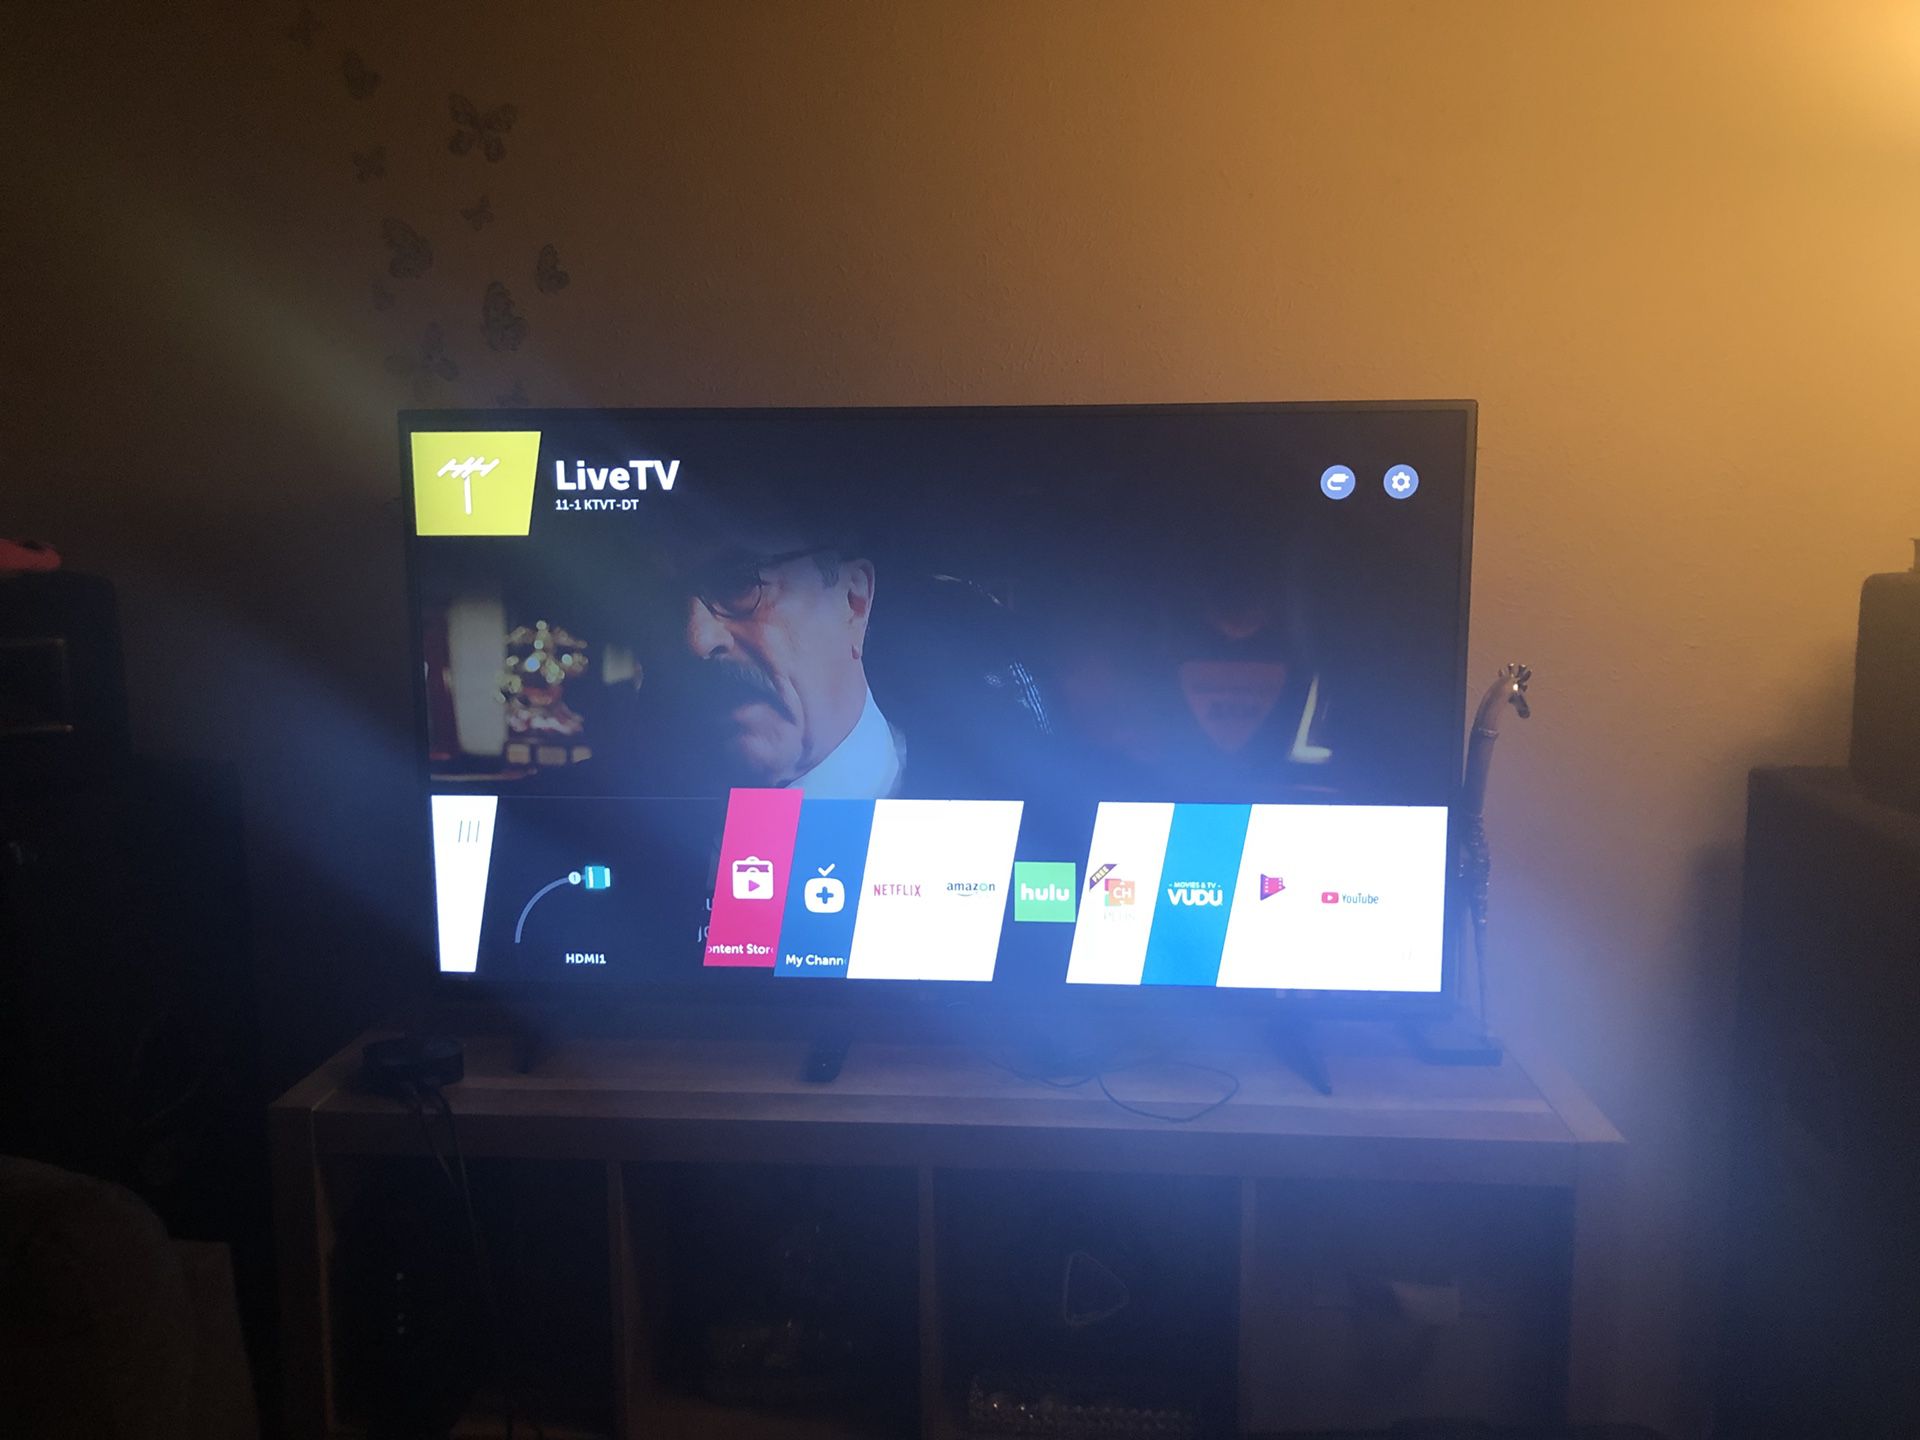 LG smart TV “50 inch”